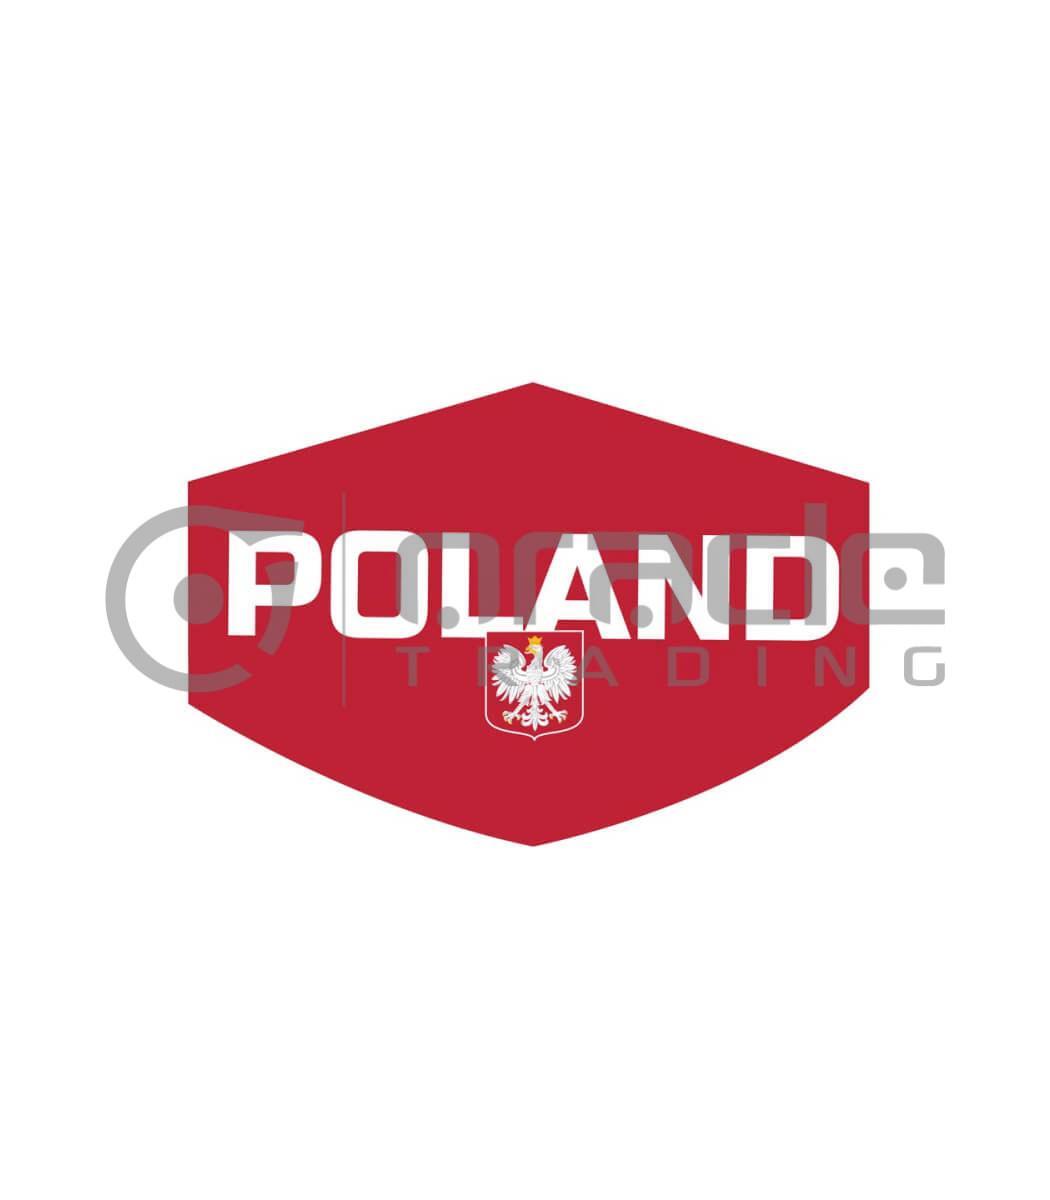 Poland Face Mask (Premium)